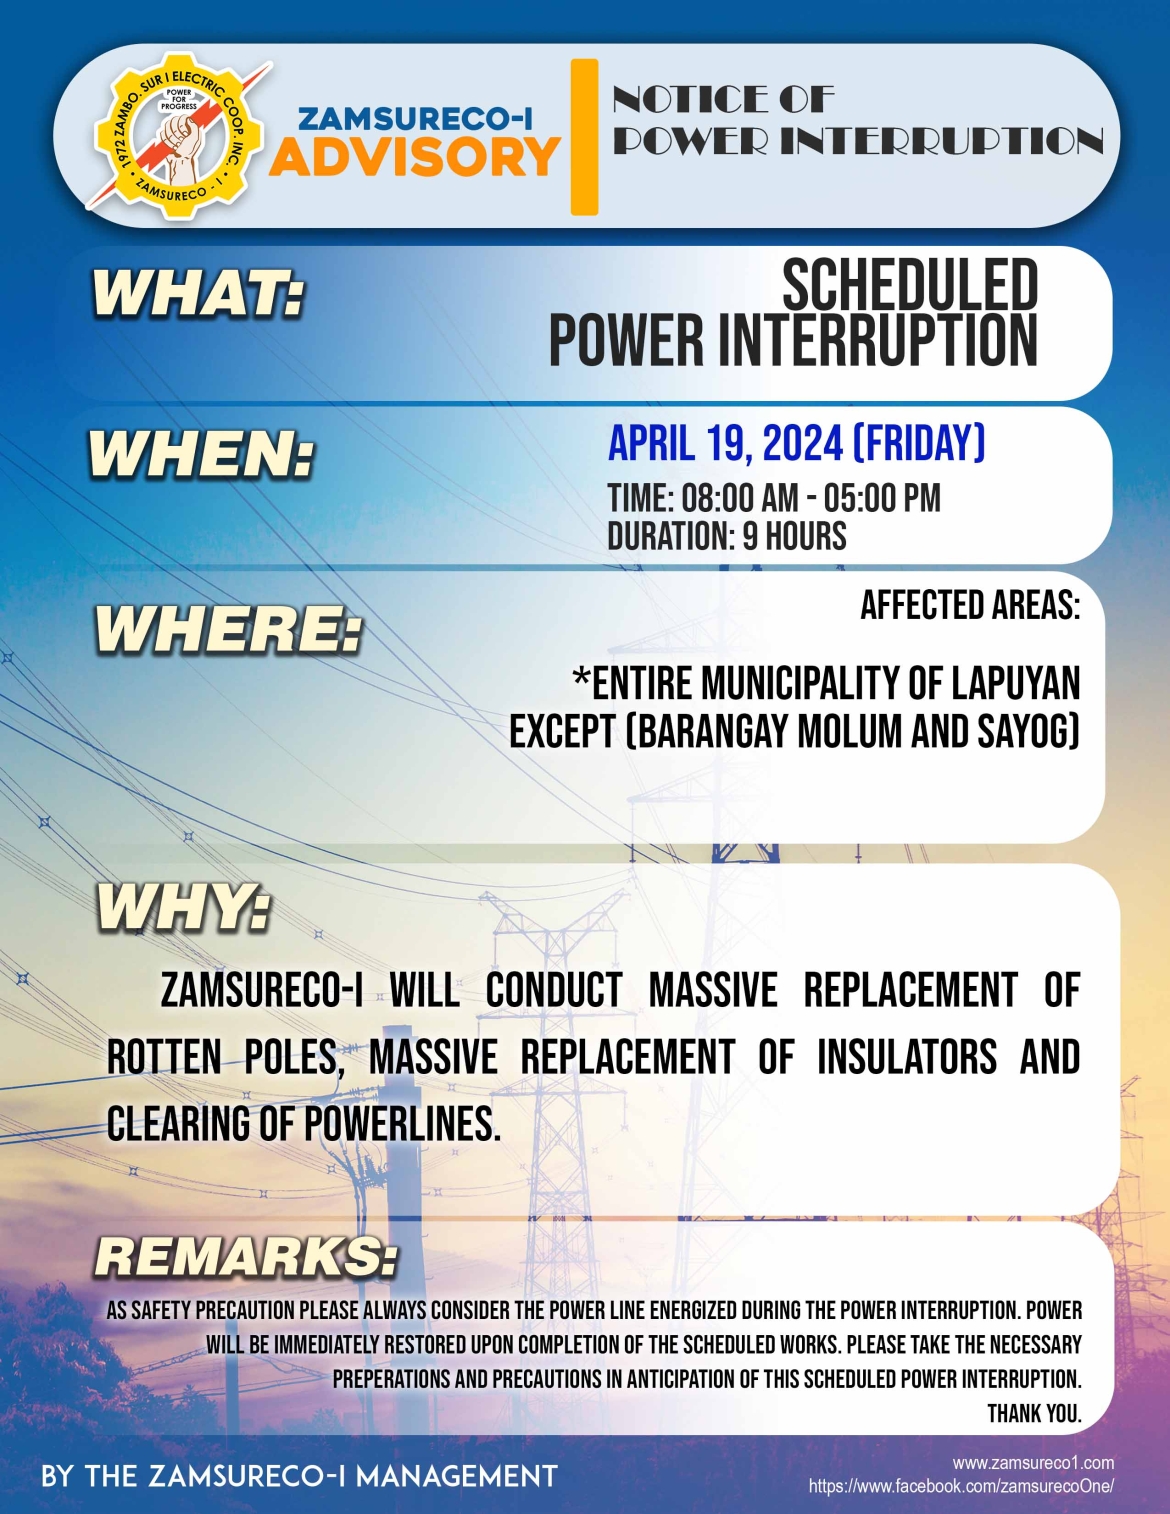 SCHEDULE POWER INTERRUPTION (APRIL 19, 2024) between 8:00 AM - 5:00 PM